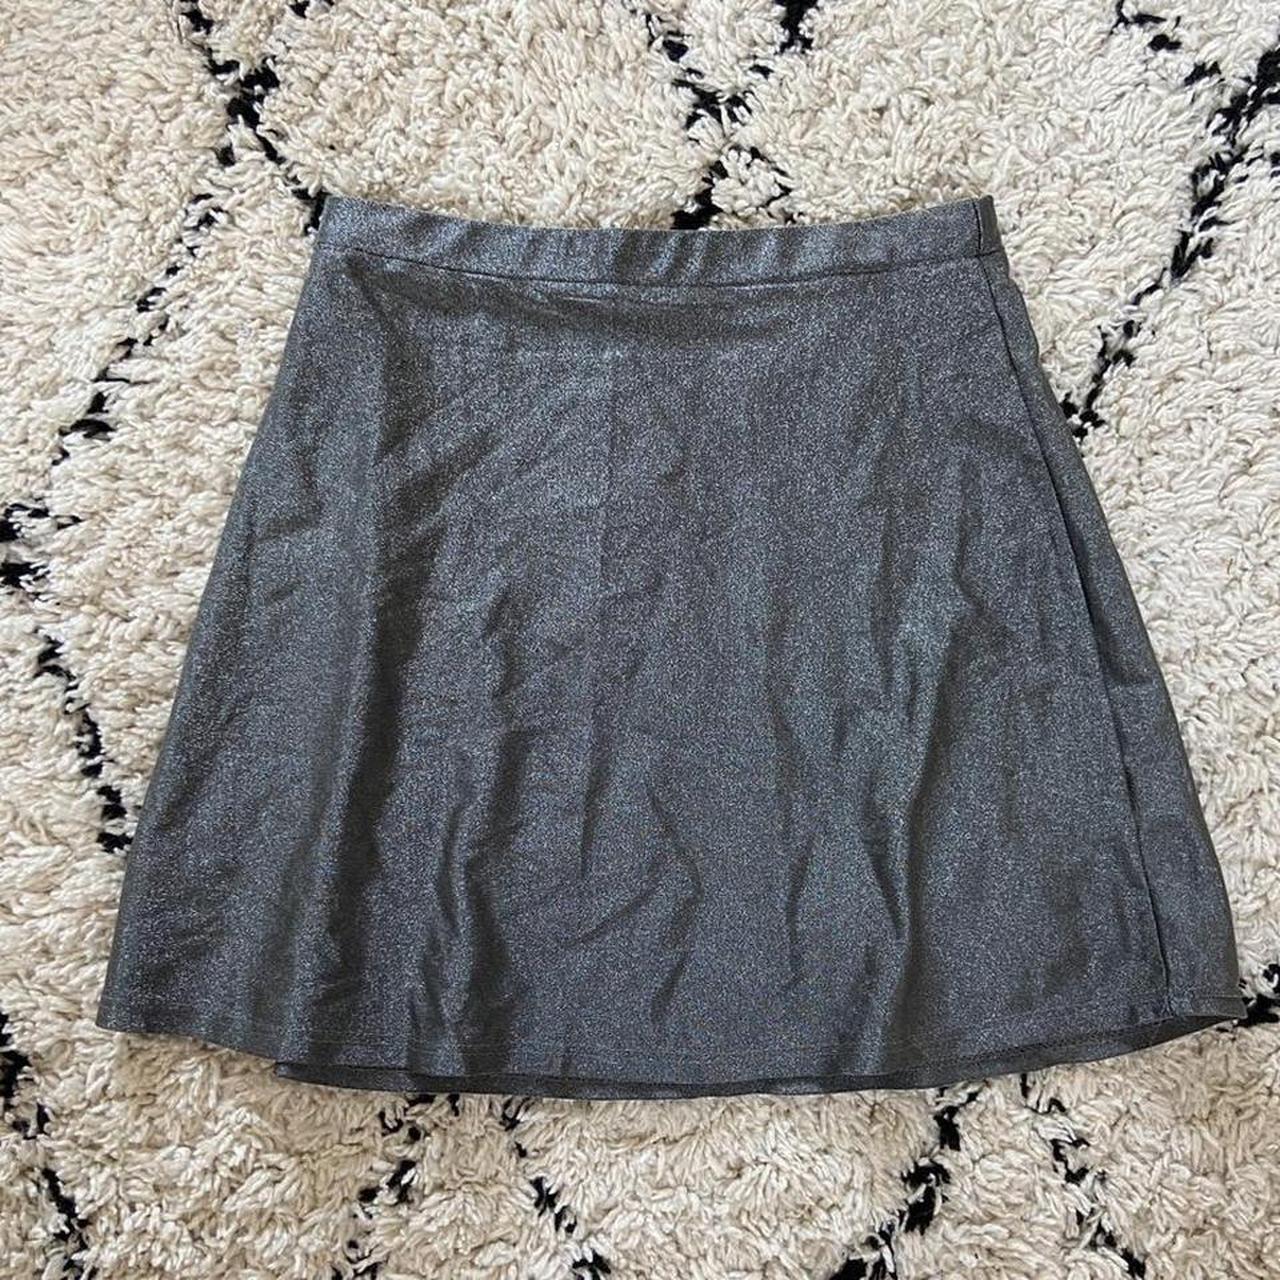 Vintage sparkly silver mini skirt Skater skirt fit,... - Depop